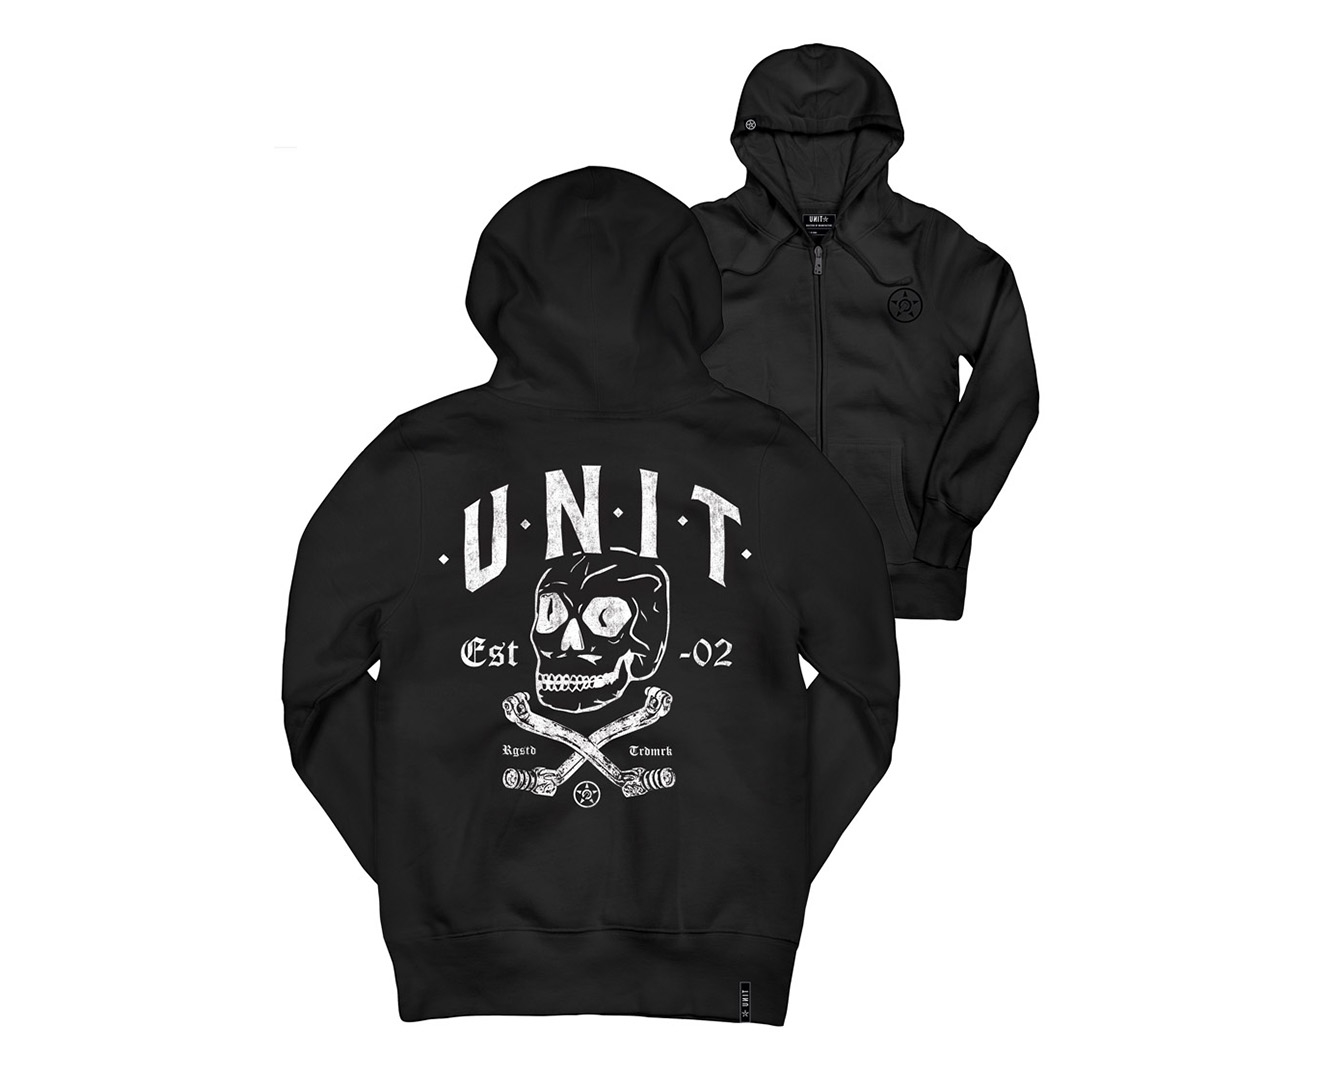 Unit Youth Fleece Pinning Zip Through Hoodie - Black/White | Catch.com.au